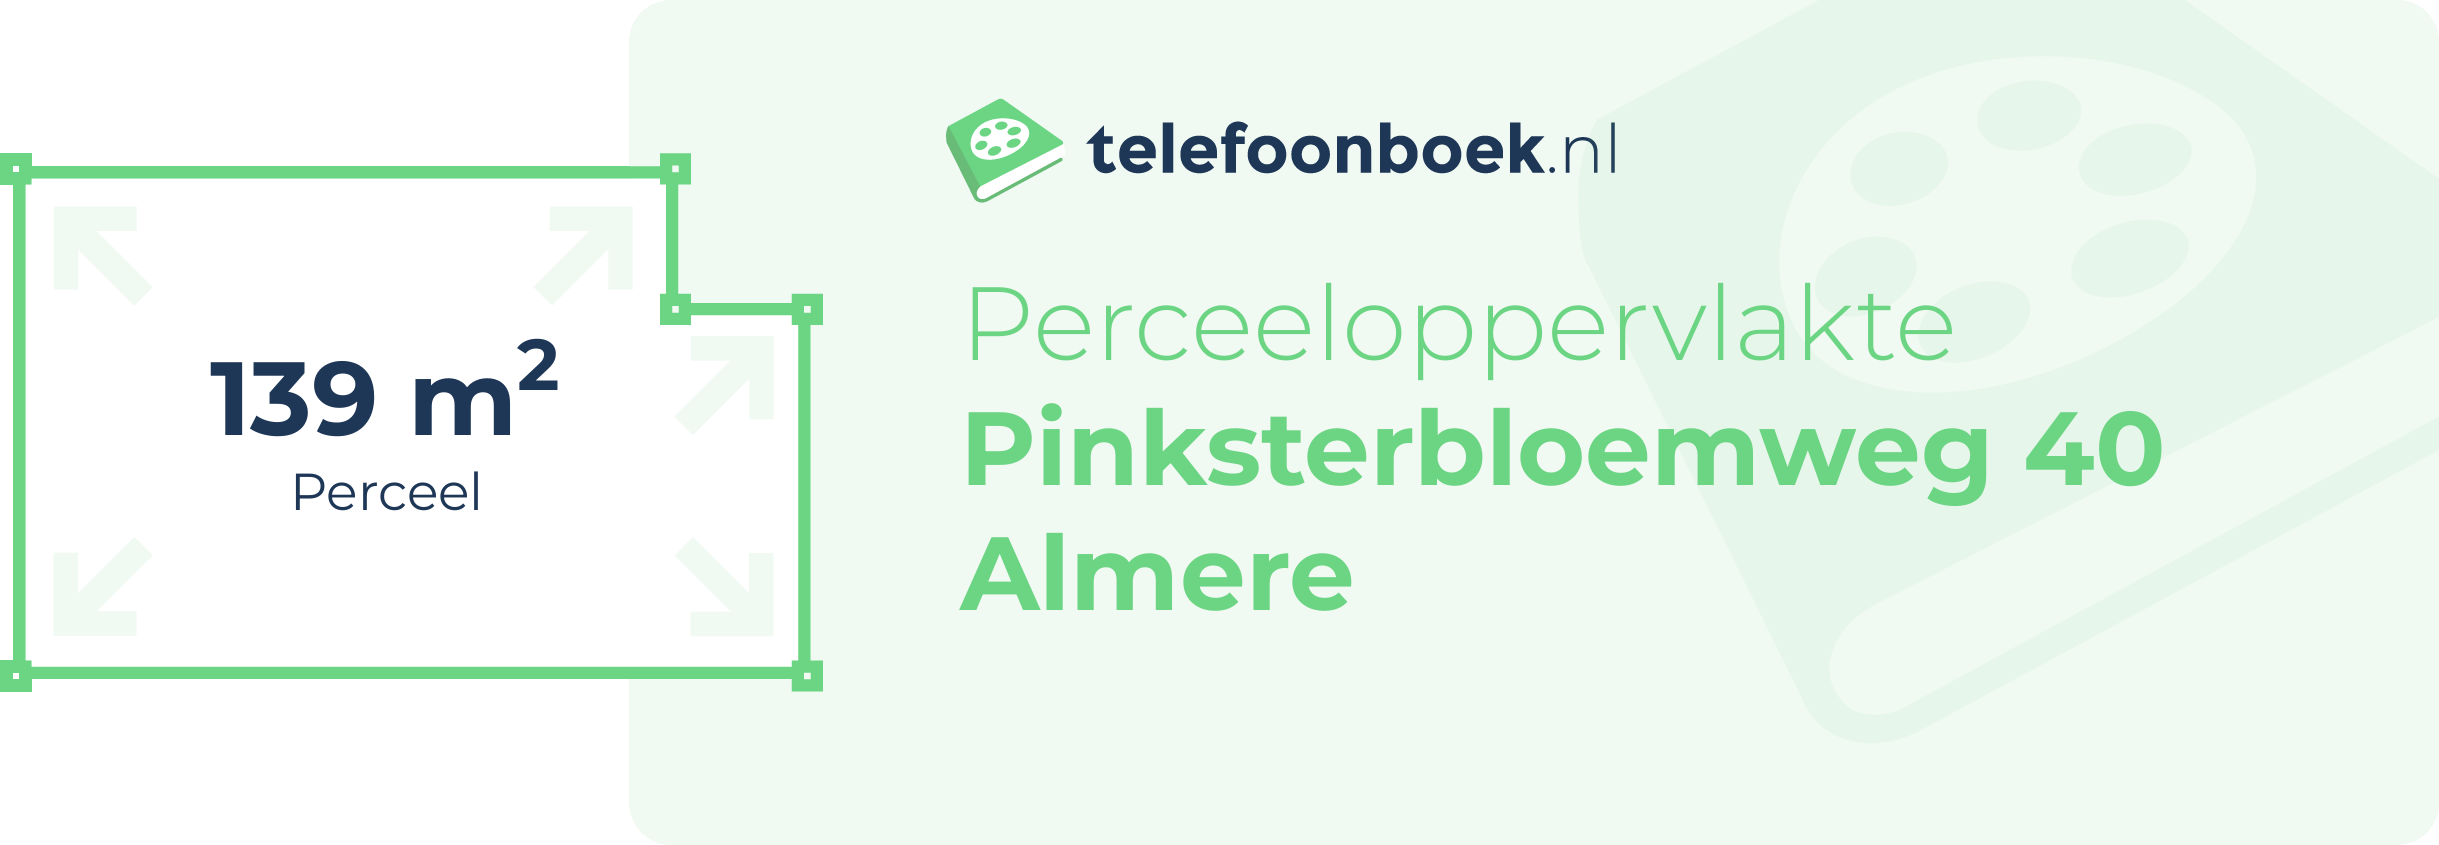 Perceeloppervlakte Pinksterbloemweg 40 Almere